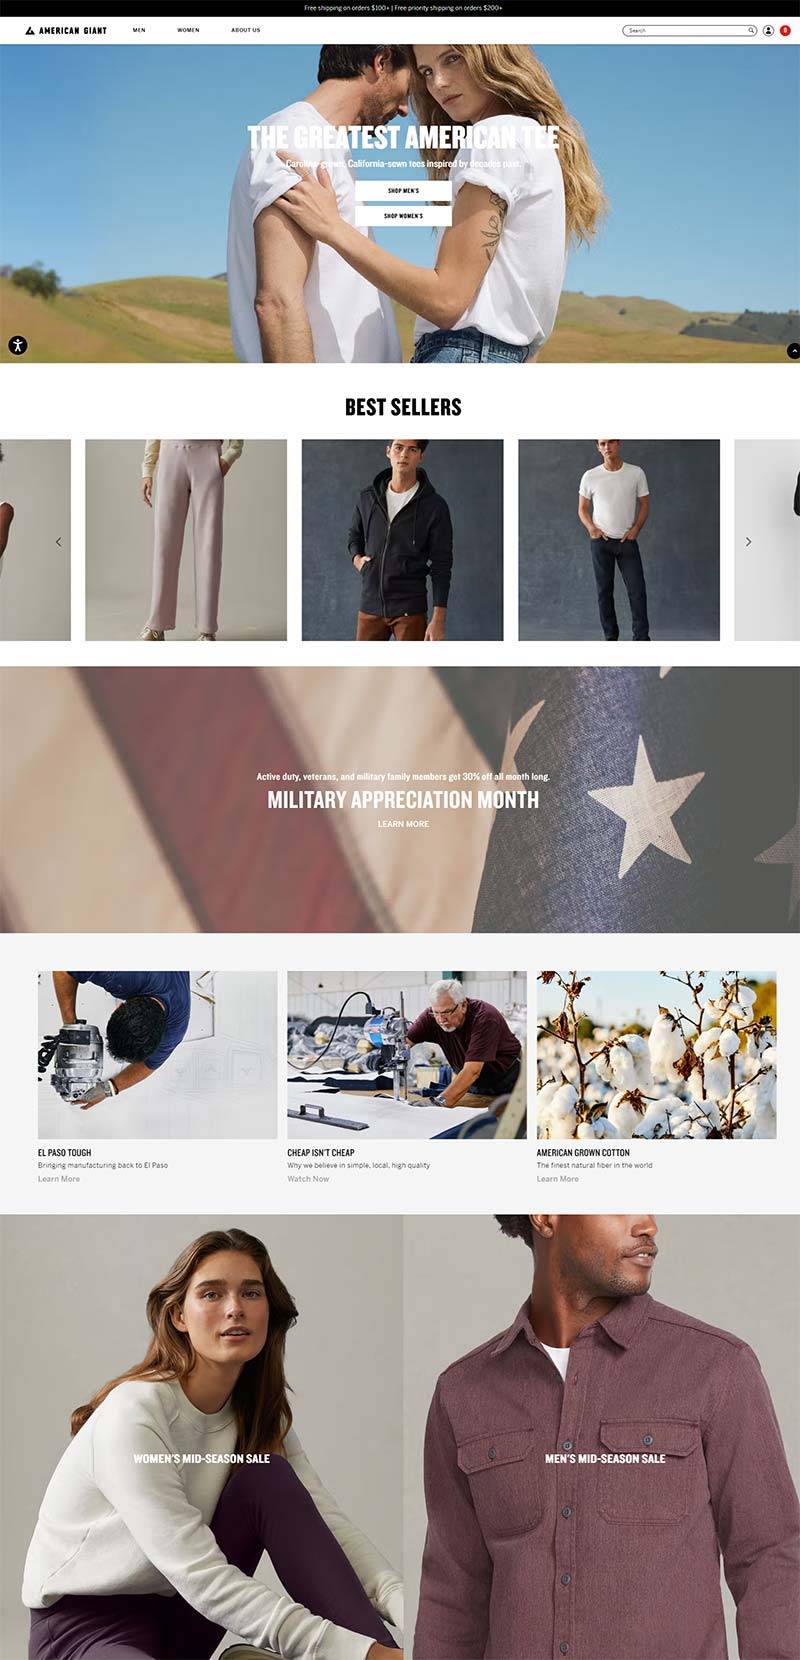 American Giant 美国时尚T恤服饰品牌网站